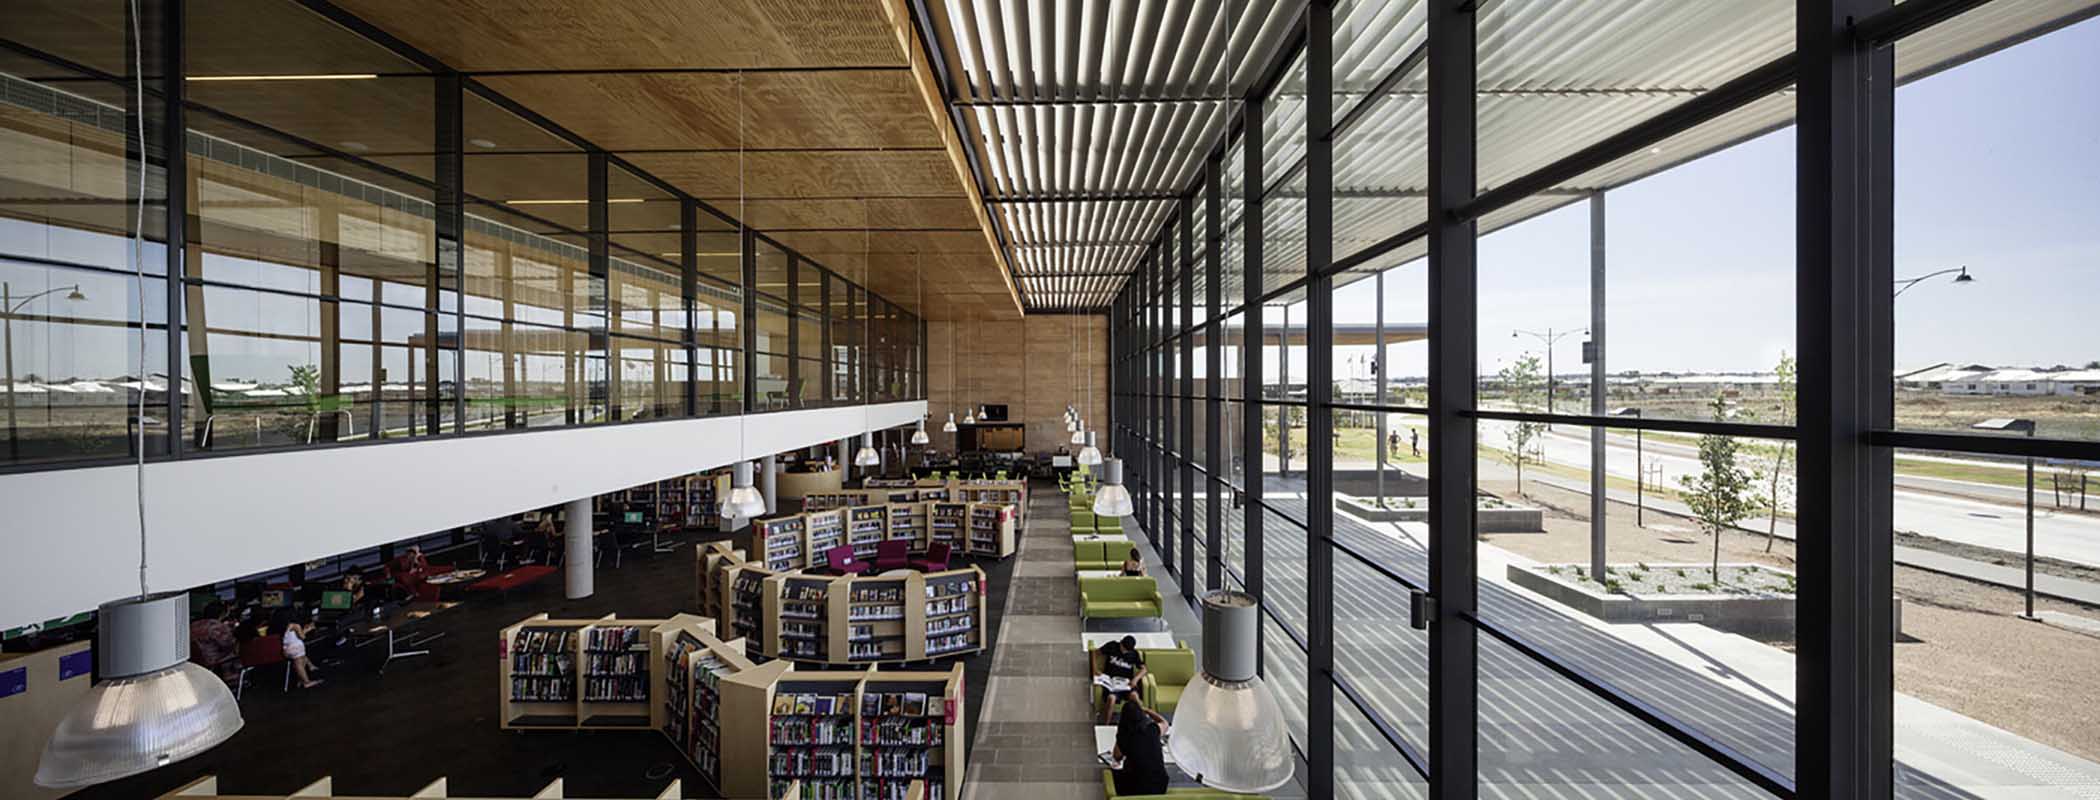 Hume Libraries Craigieburn interior